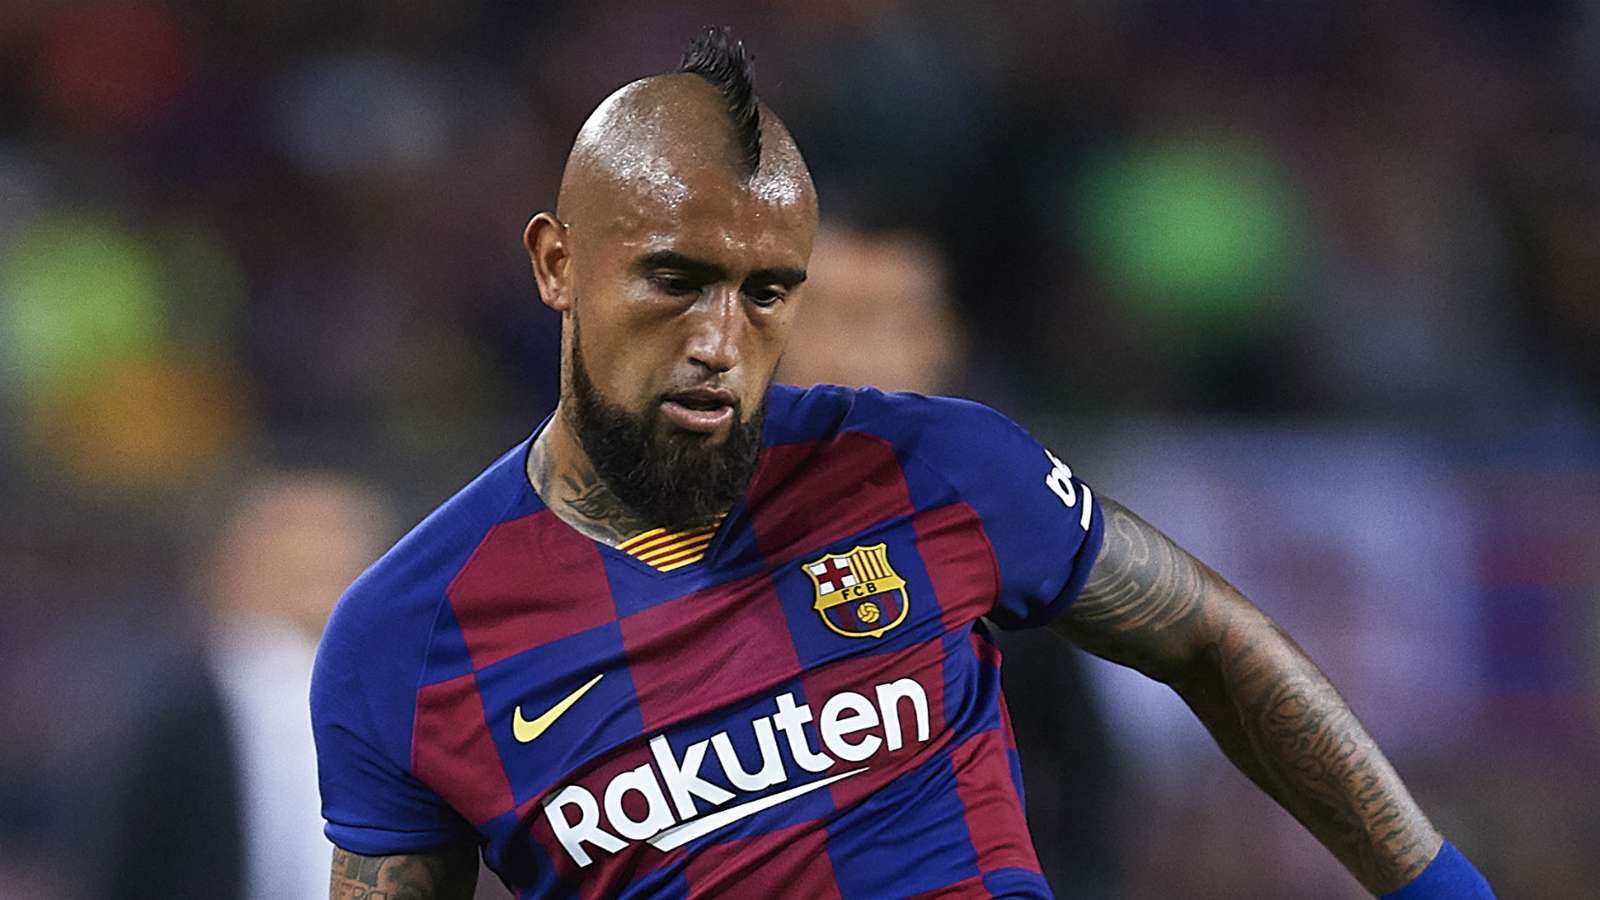 Samuel hopes Vidal to spend his career at Barça